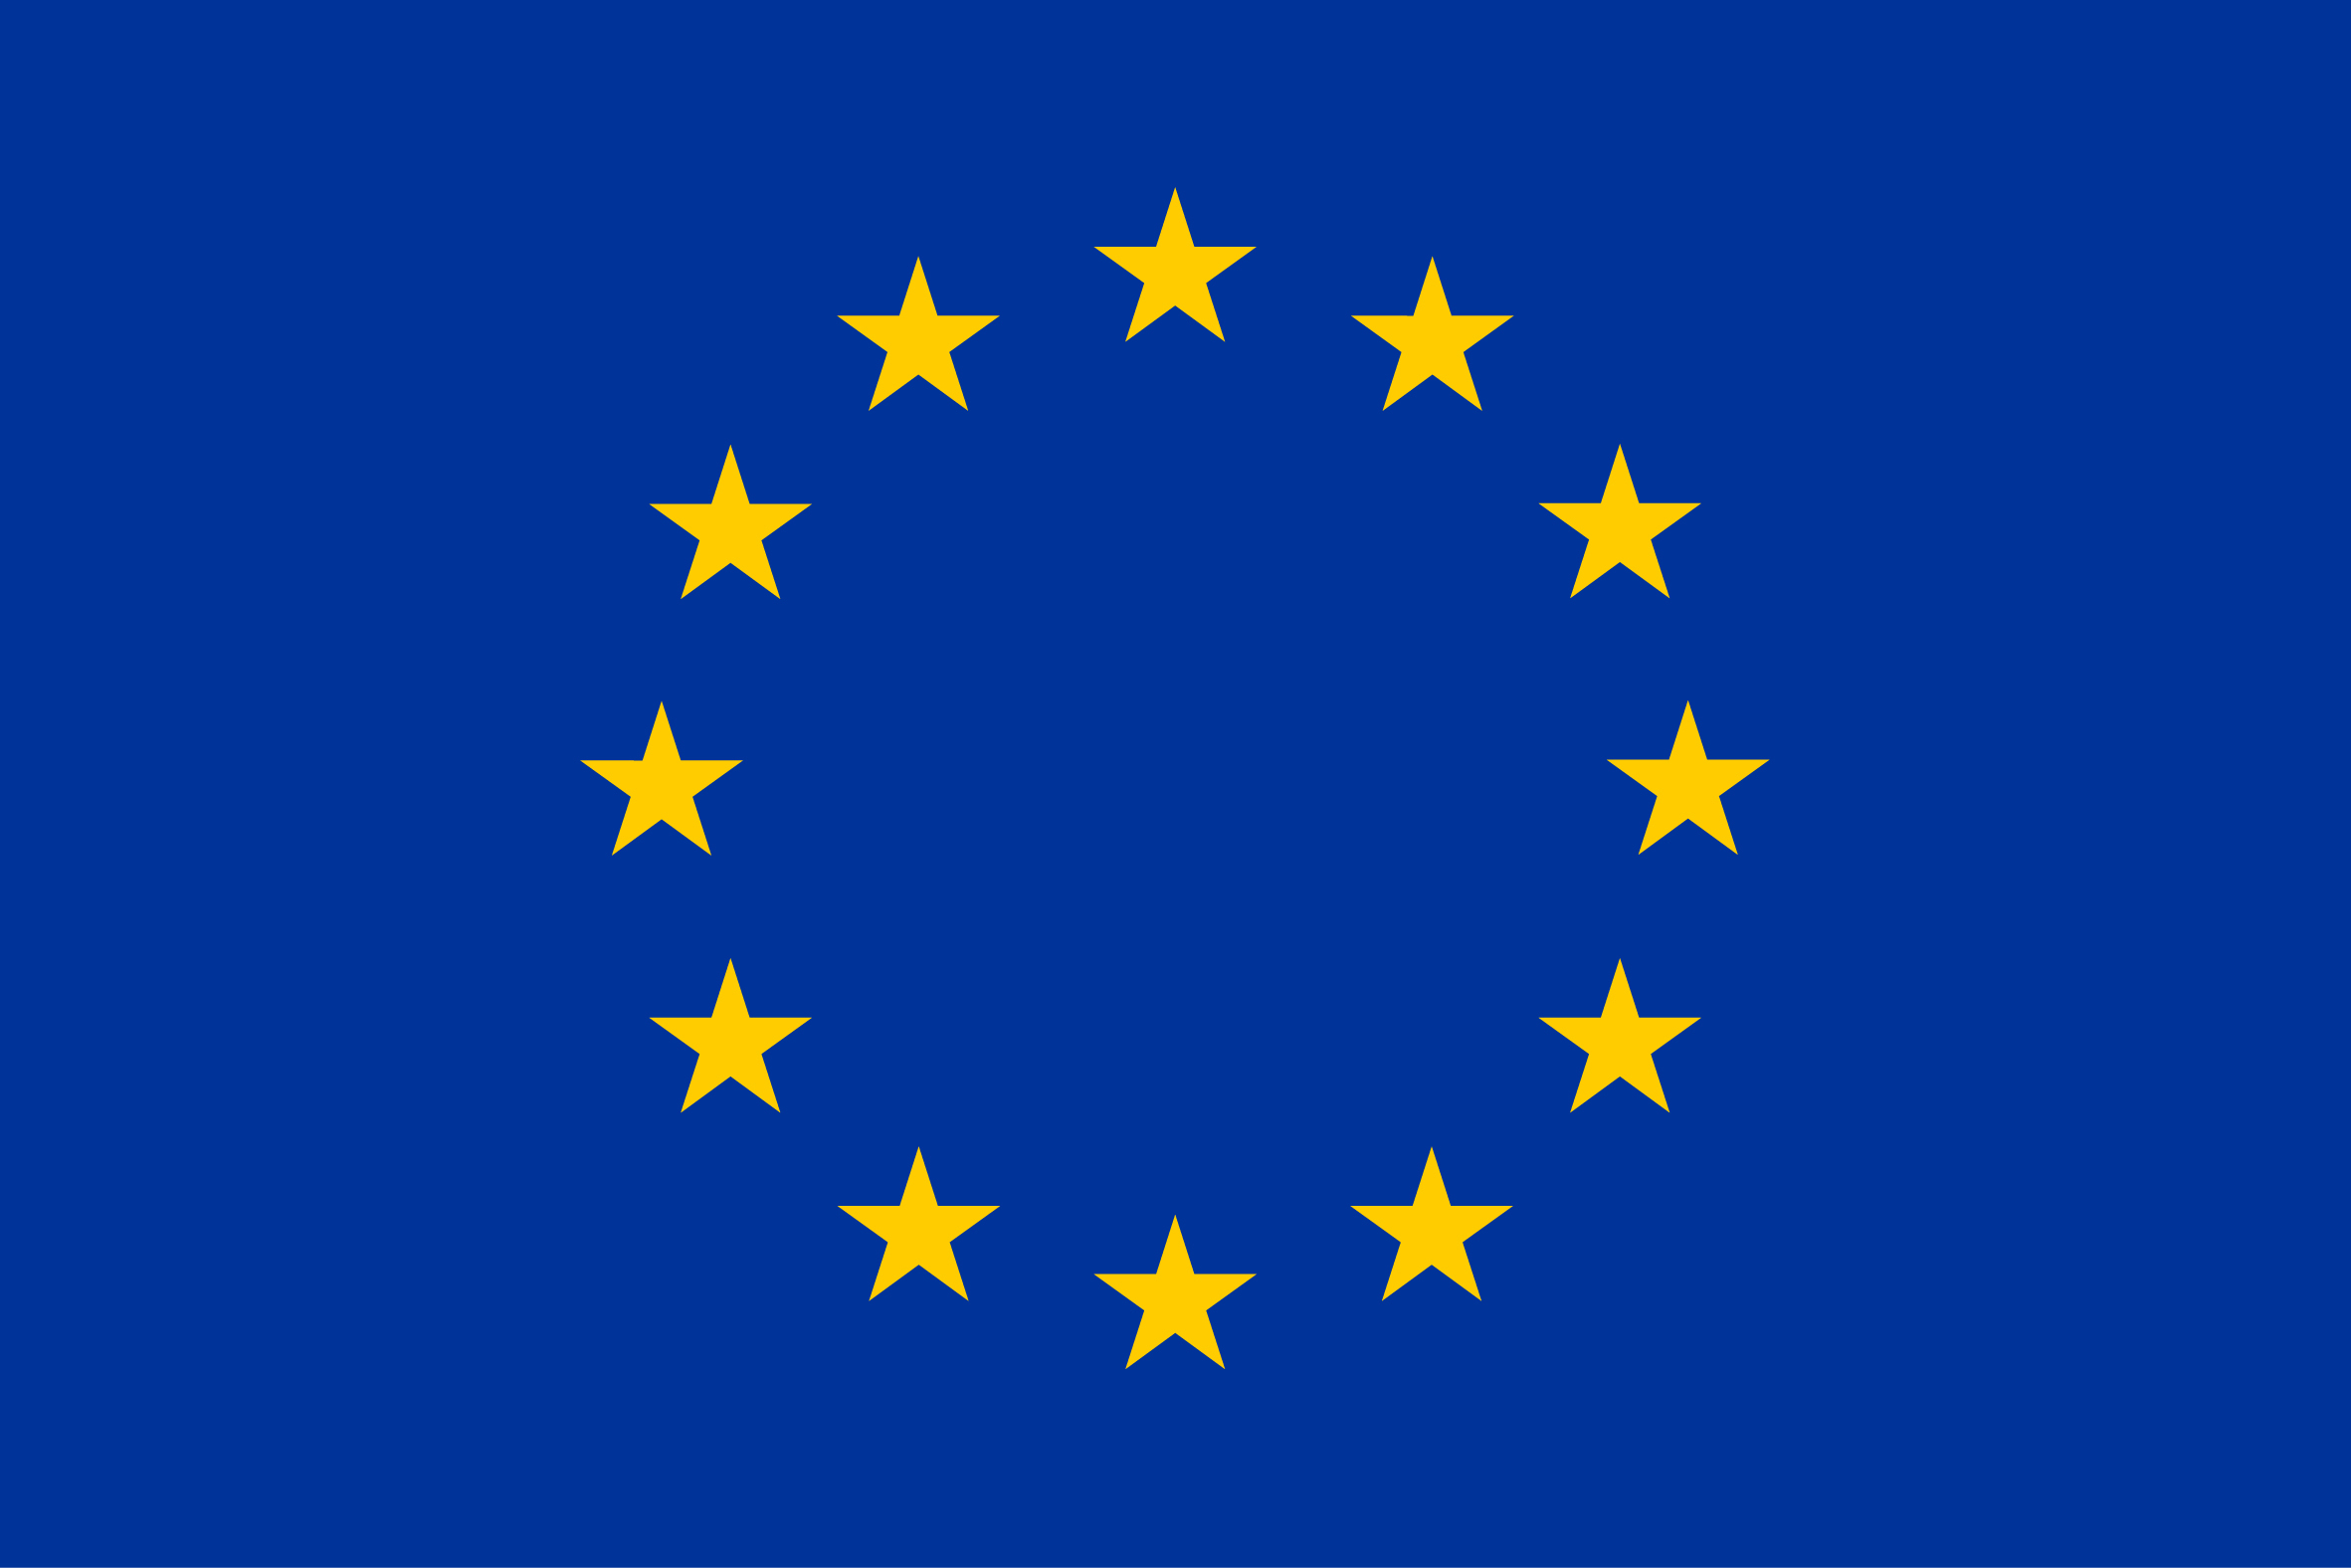 EU-flagget i blått med tolv gule stjerner.